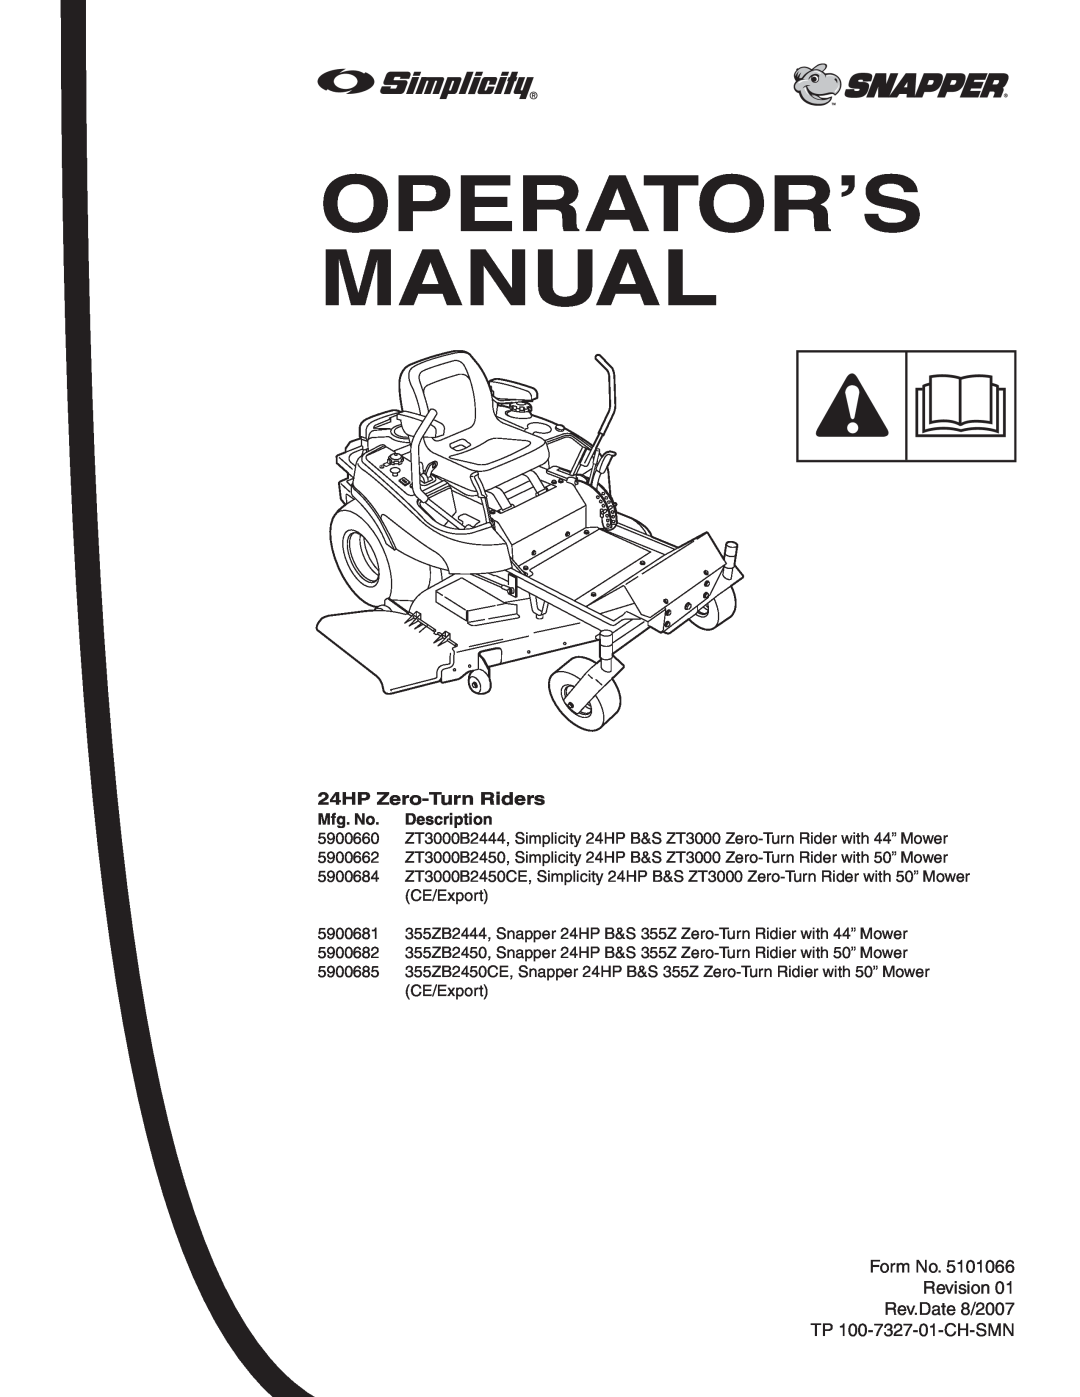 Simplicity manual Operator’S Manual, 24HP Zero-TurnRiders, Mfg. No. Description 